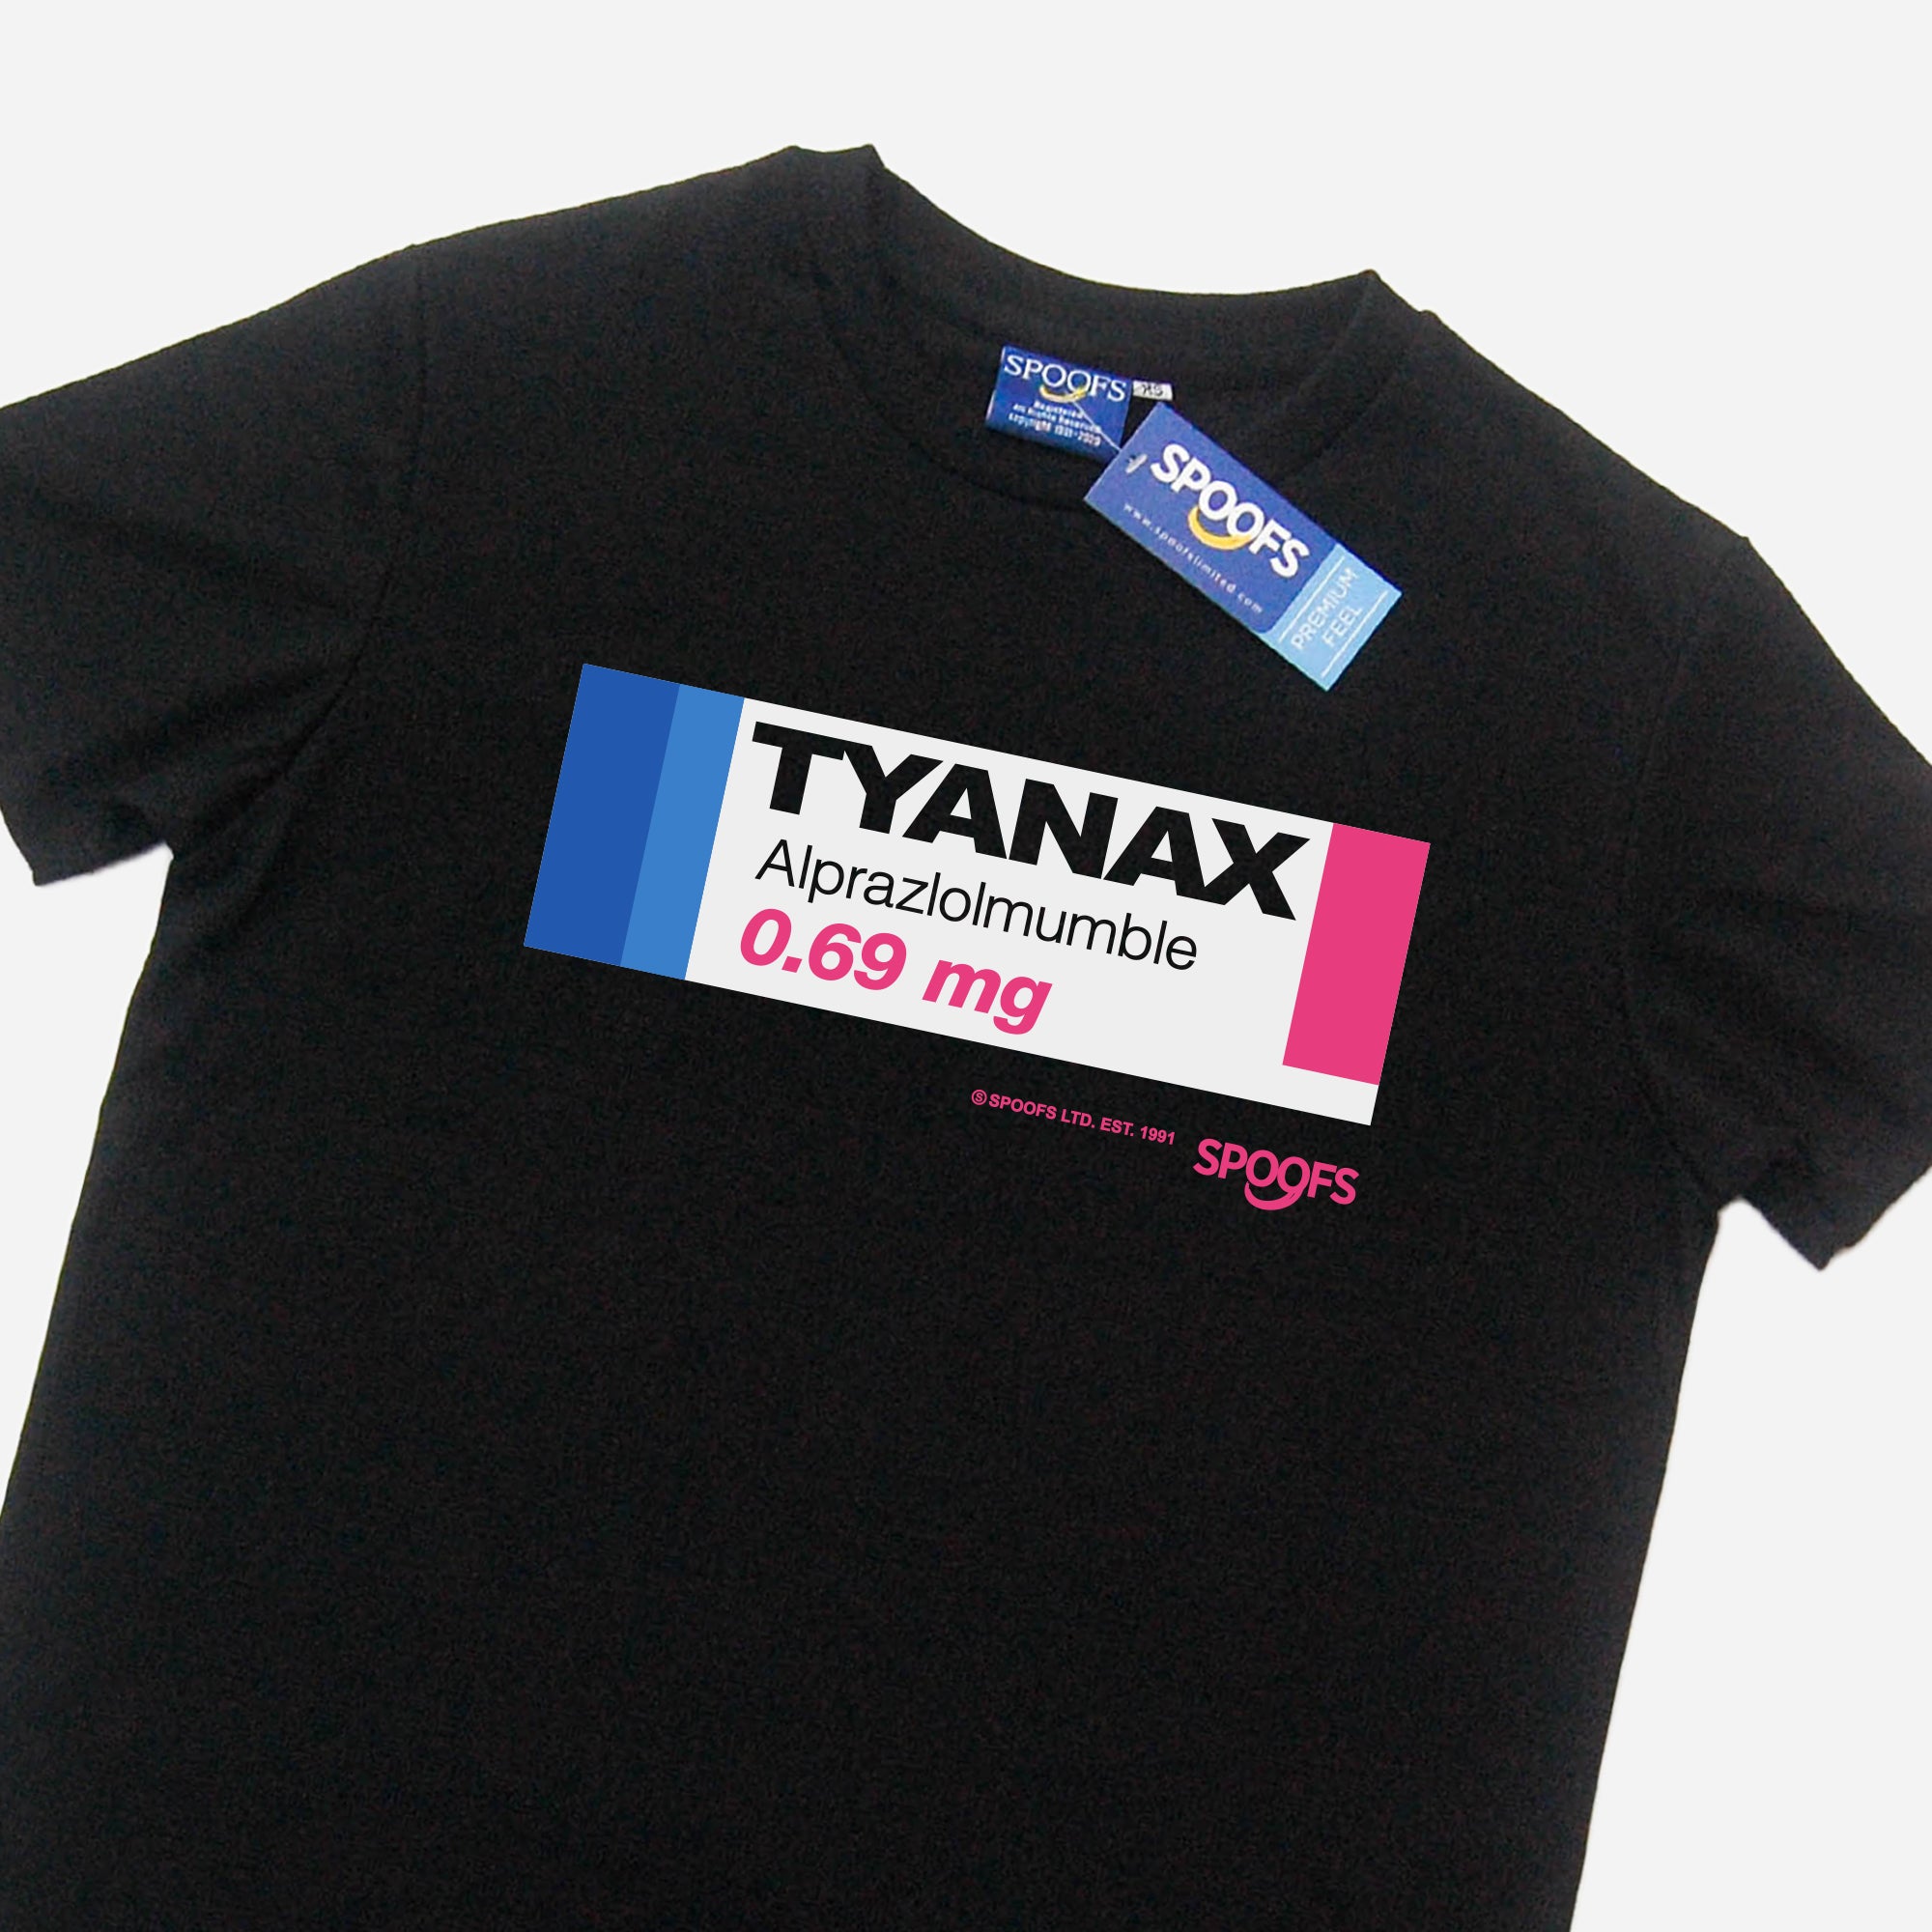 Tyanax (Black)